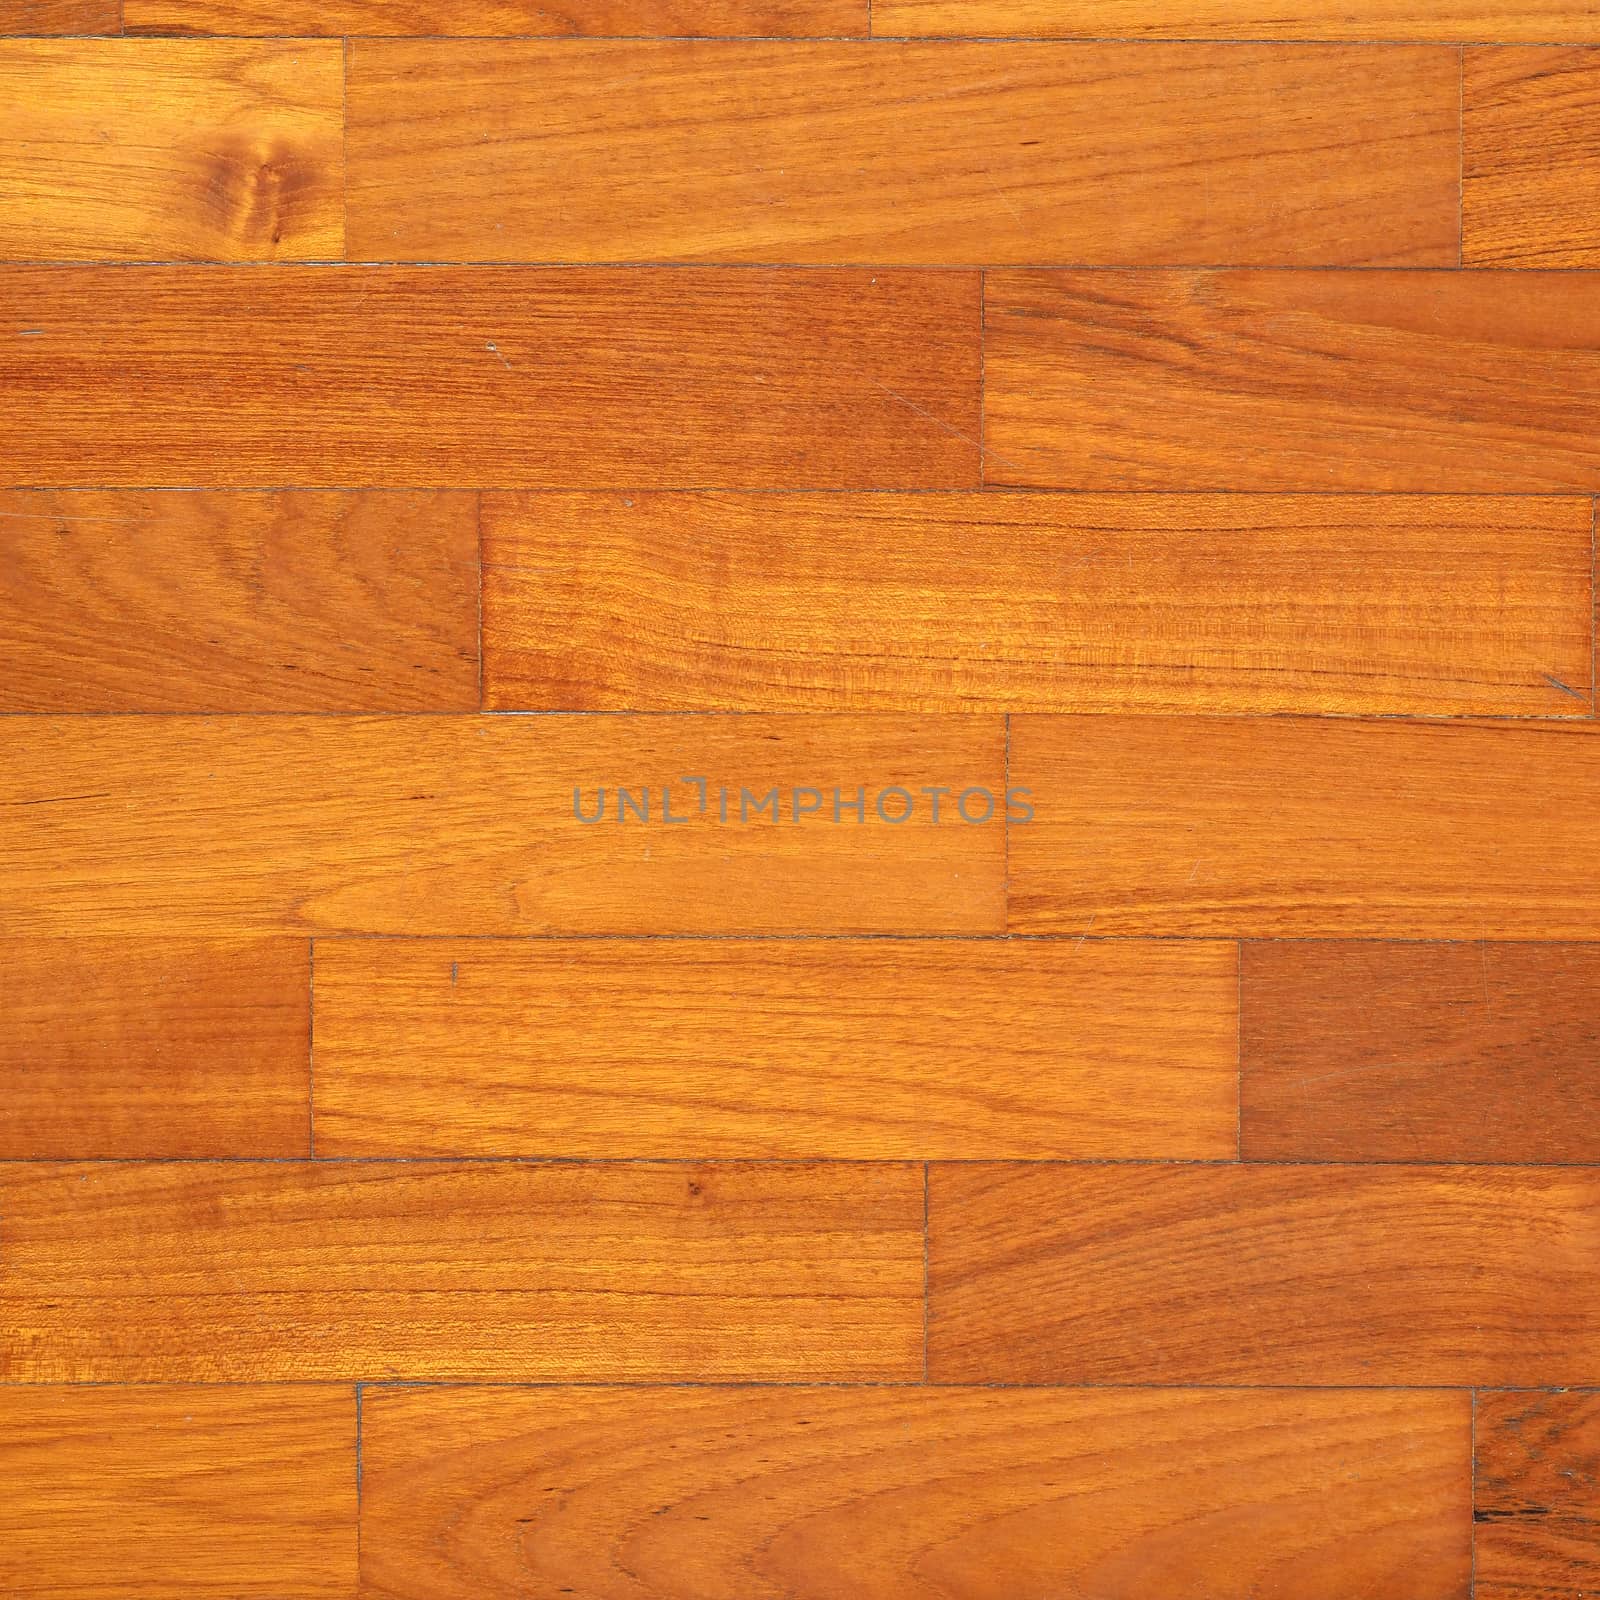 brown wood floor useful as a background